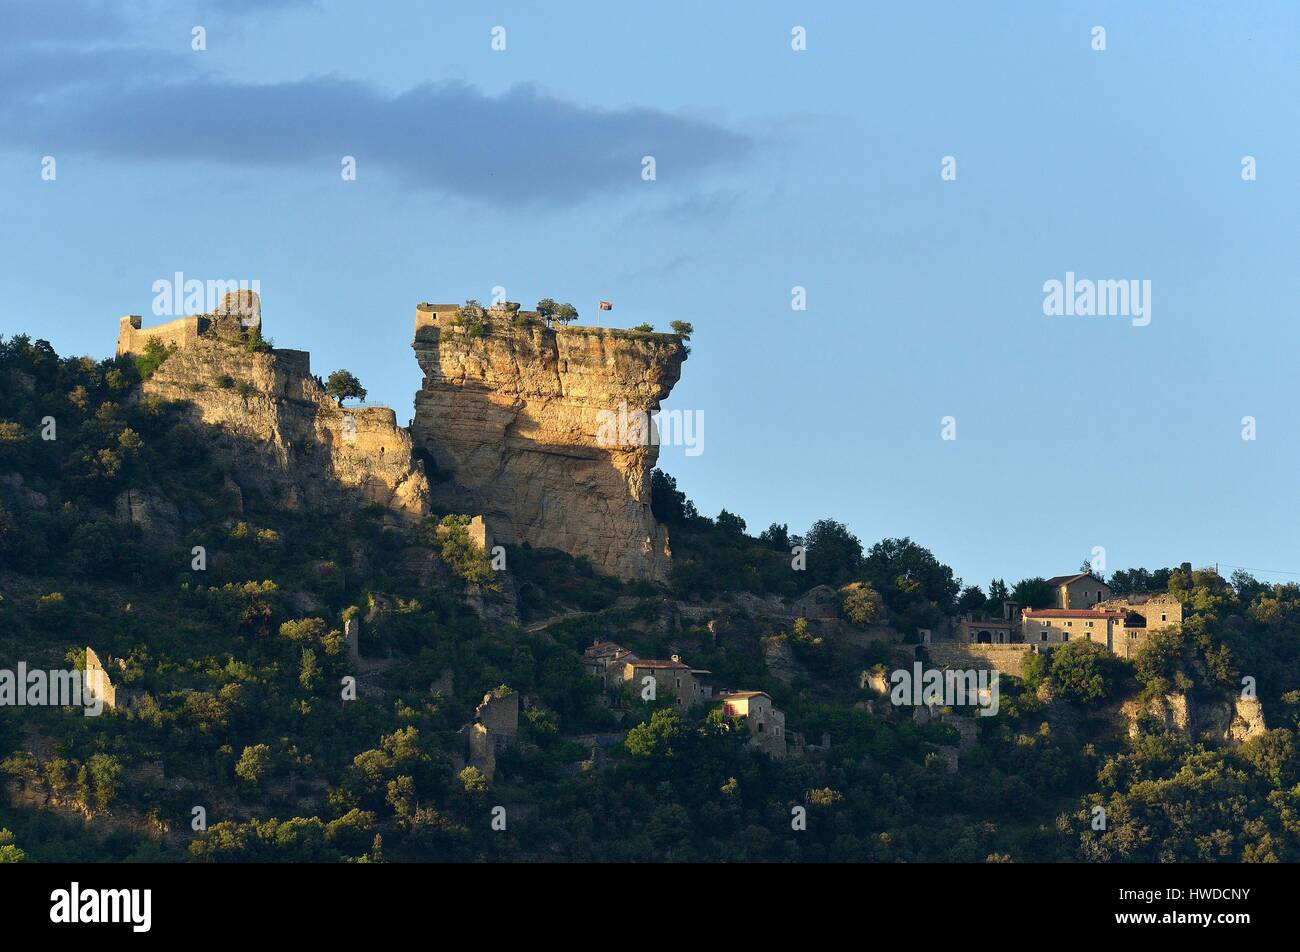 Francia, Aveyron, riviere sur tarn, Peyrelade castello del XI secolo che domina la Gorges du Tarn Foto Stock